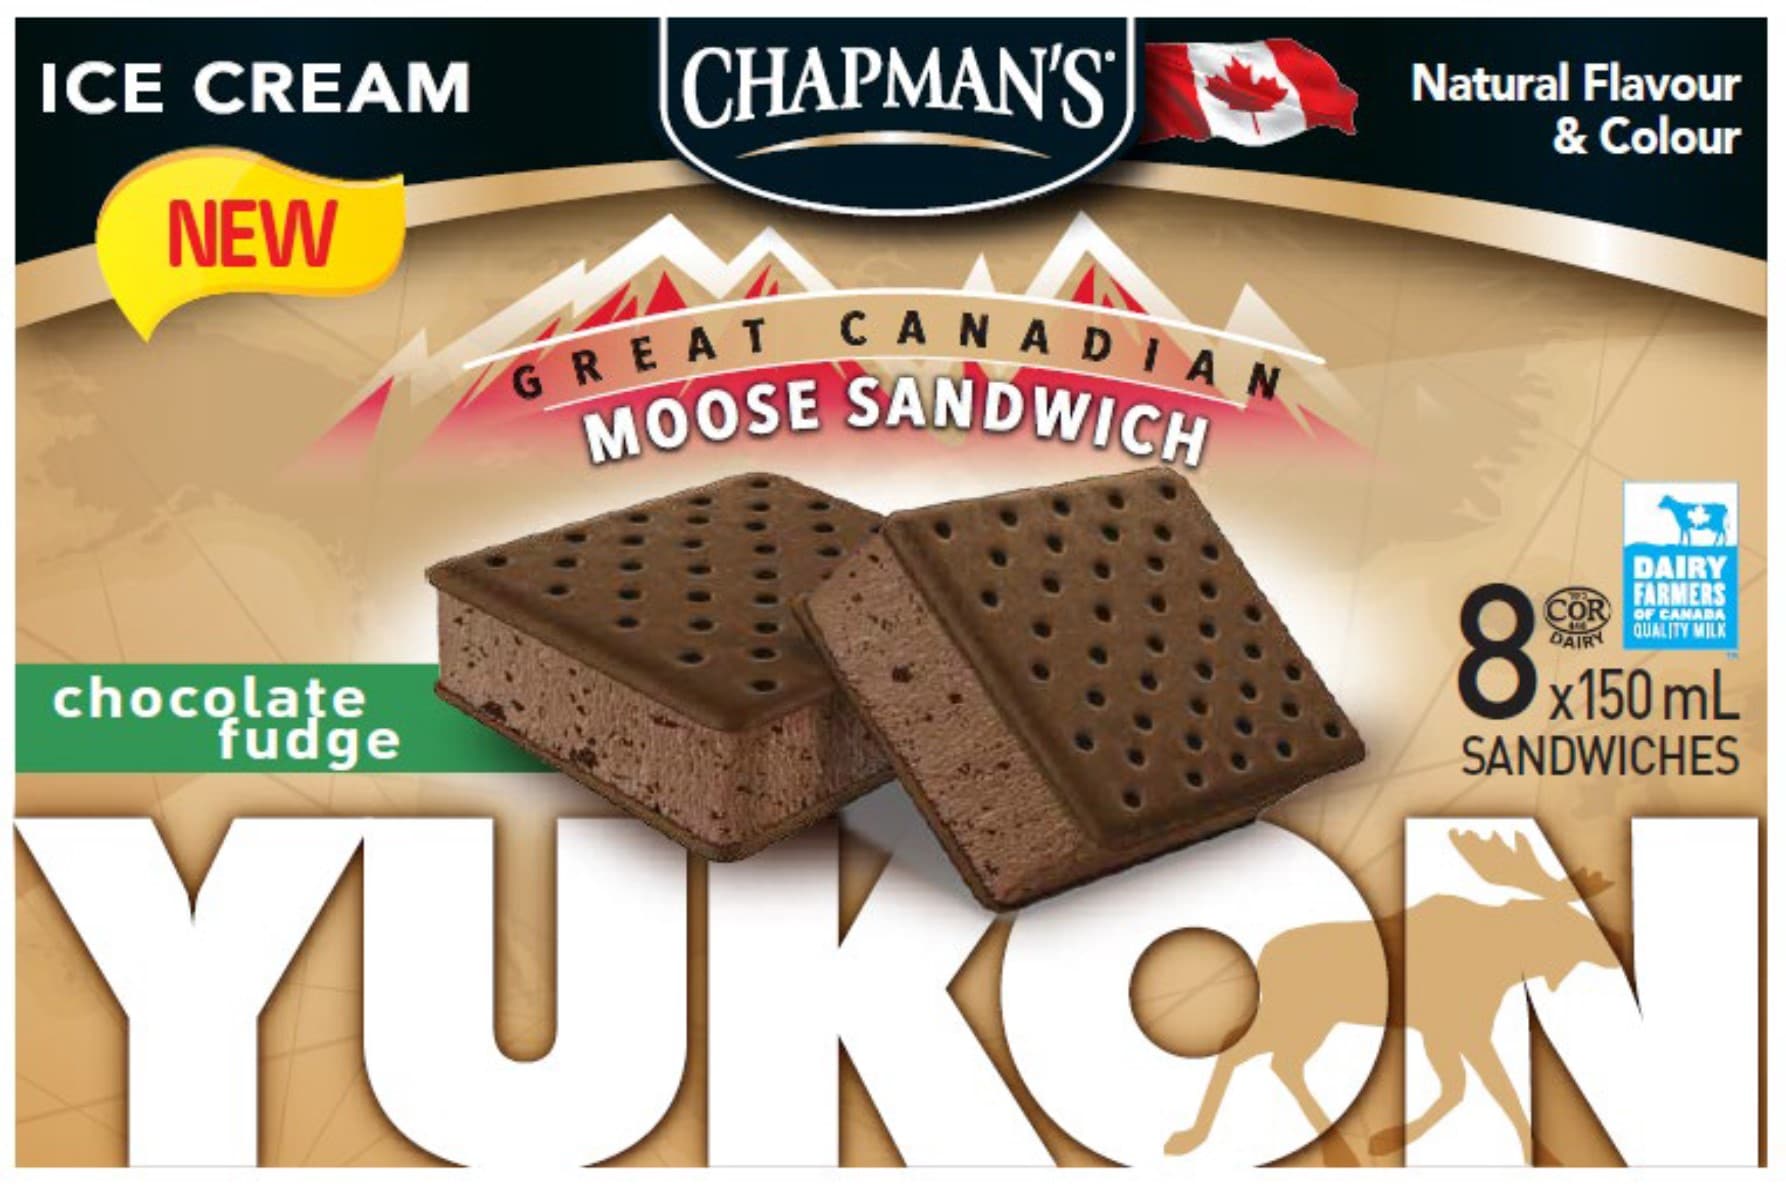 Chapman's Yukon Moose Chocolate Fudge Ice Cream Sandwich